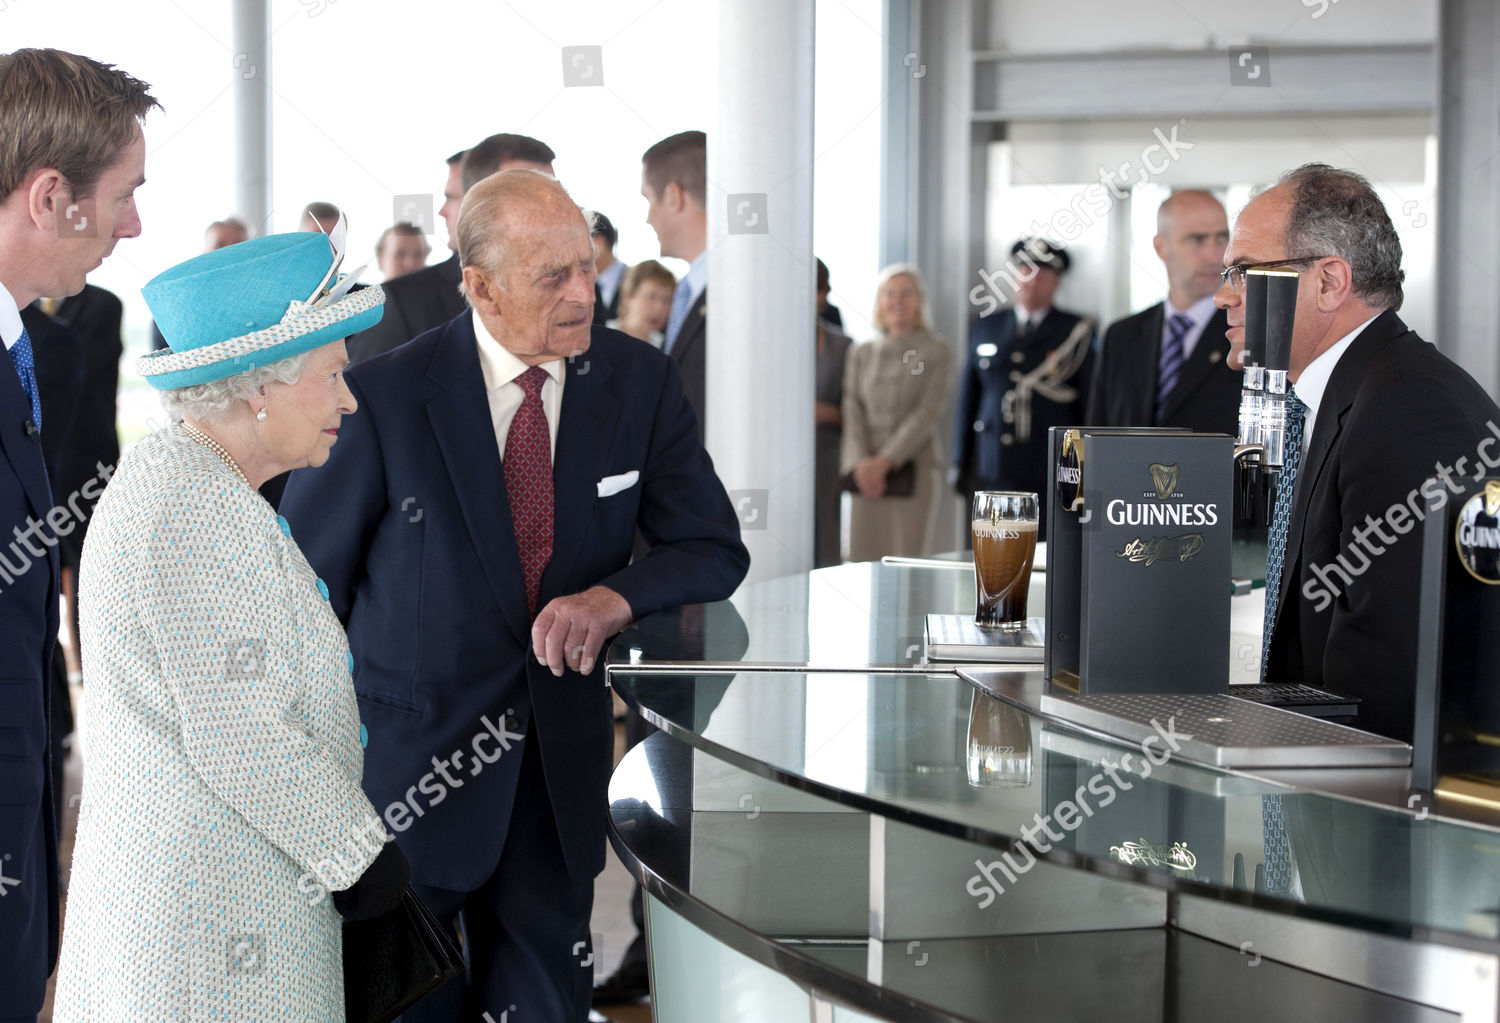 queen-elizabeth-ii-state-visit-to-dublin-ireland-shutterstock-editorial-1323990k.jpg